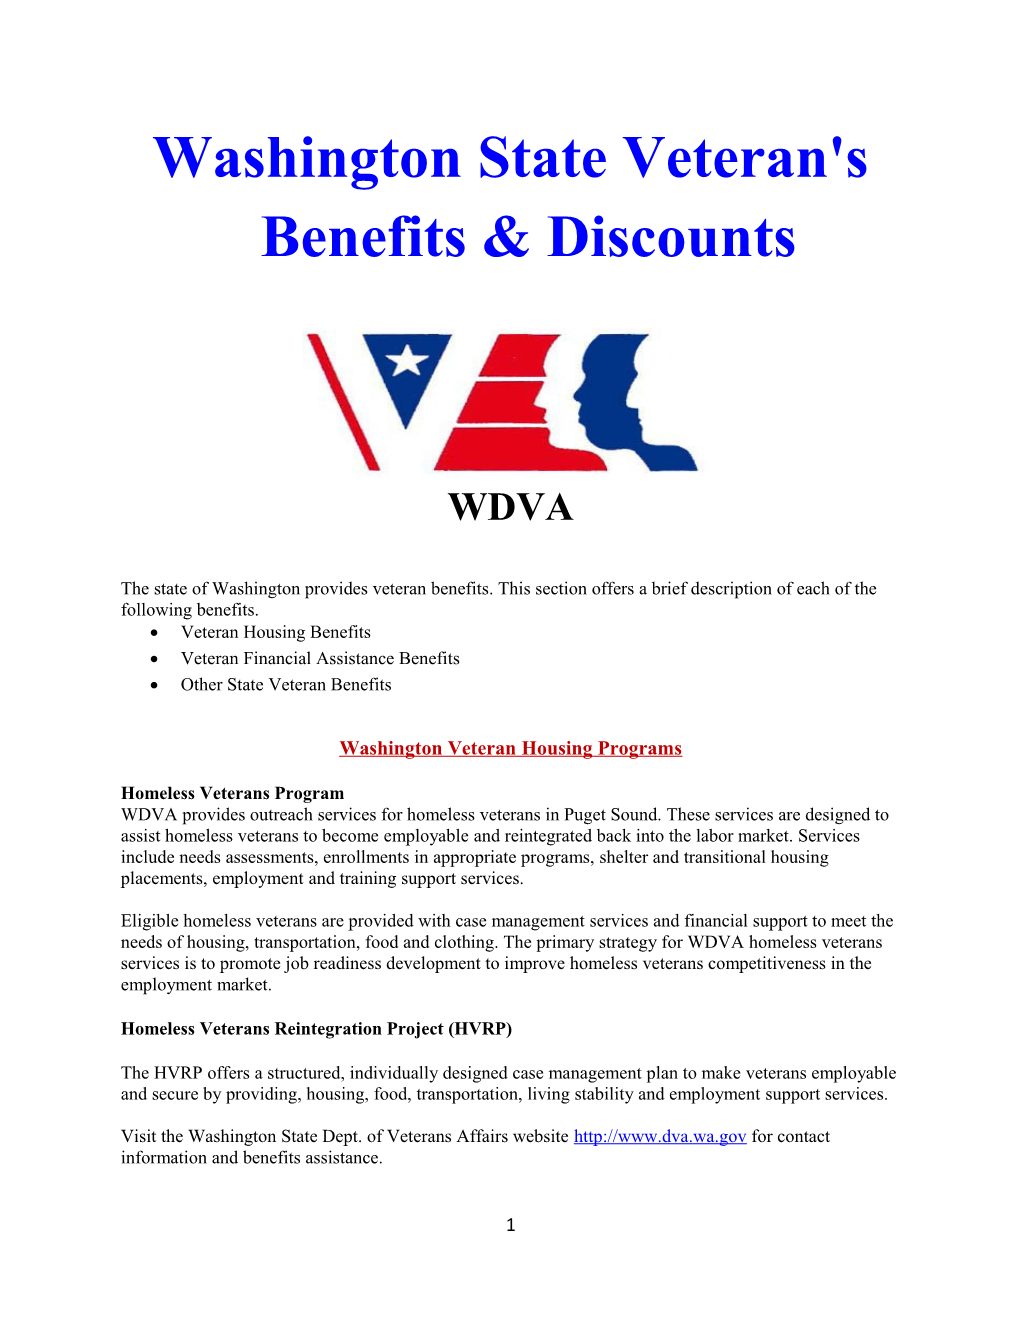 Washington State Veteran's Benefits & Discounts